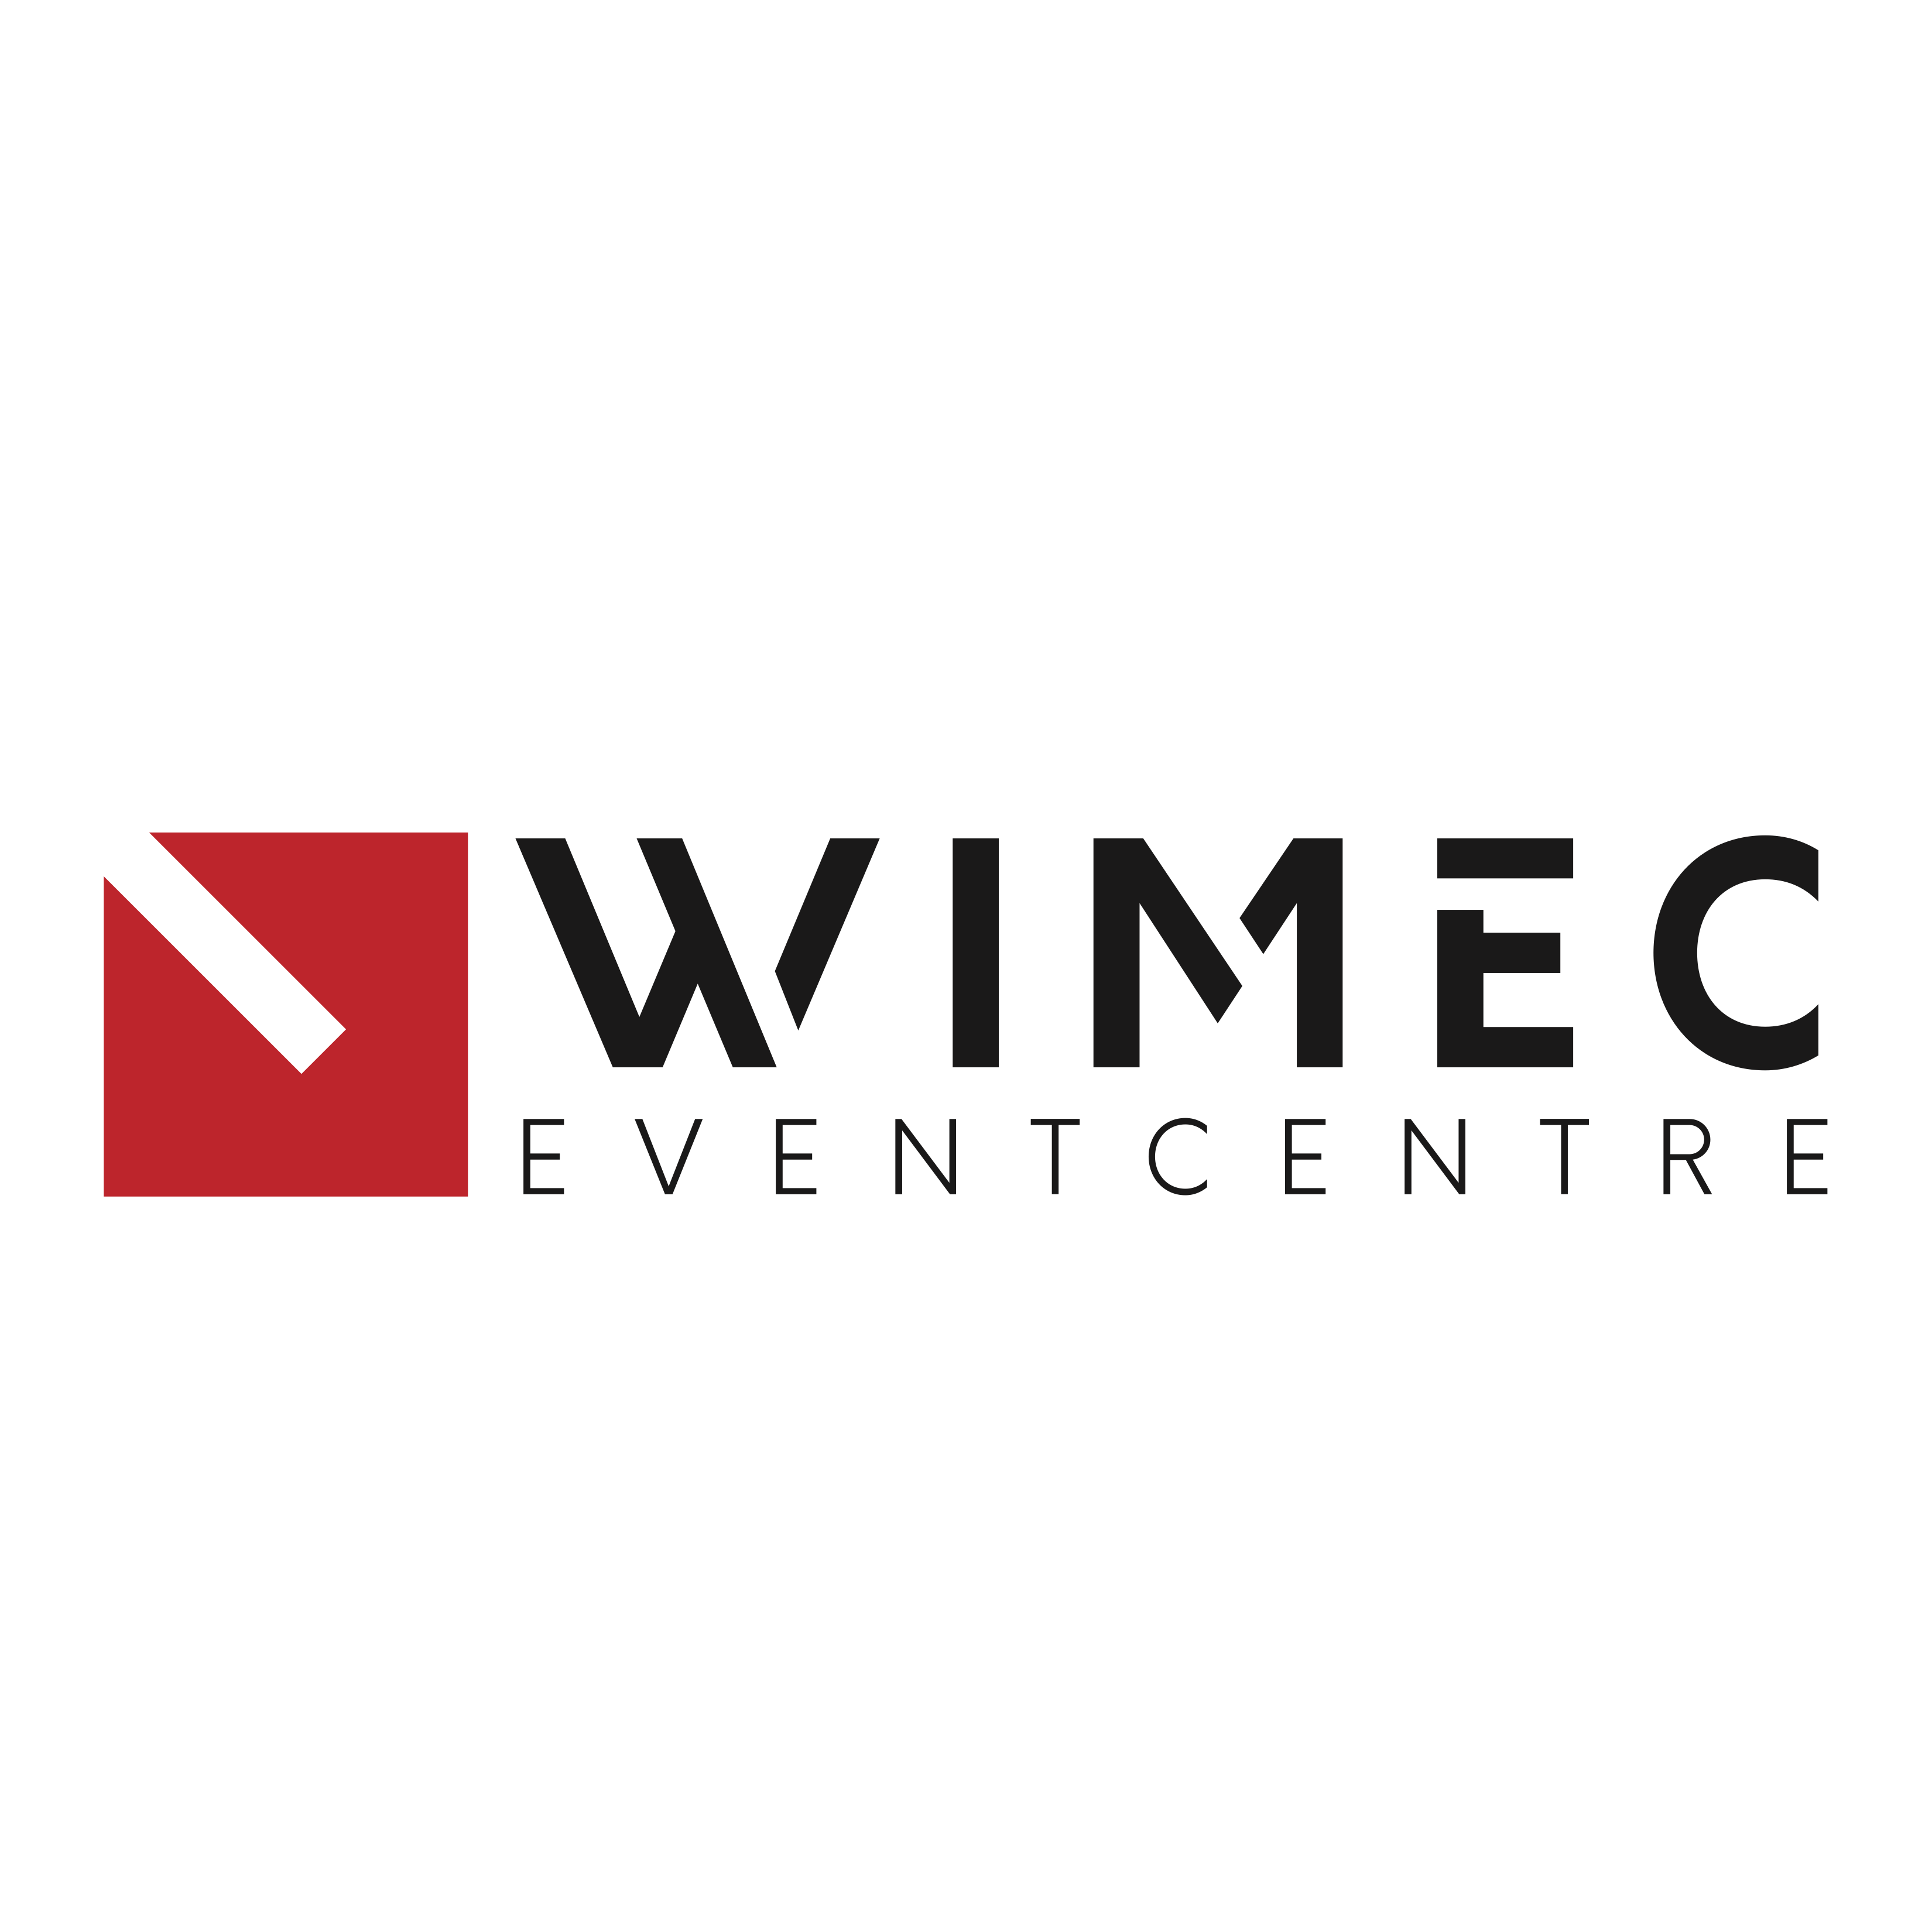 WIMEC zaalverhuur vergaderen 1000 personen maastricht eindhoven merksplas turnhout beerse factory p;olivalente zaal